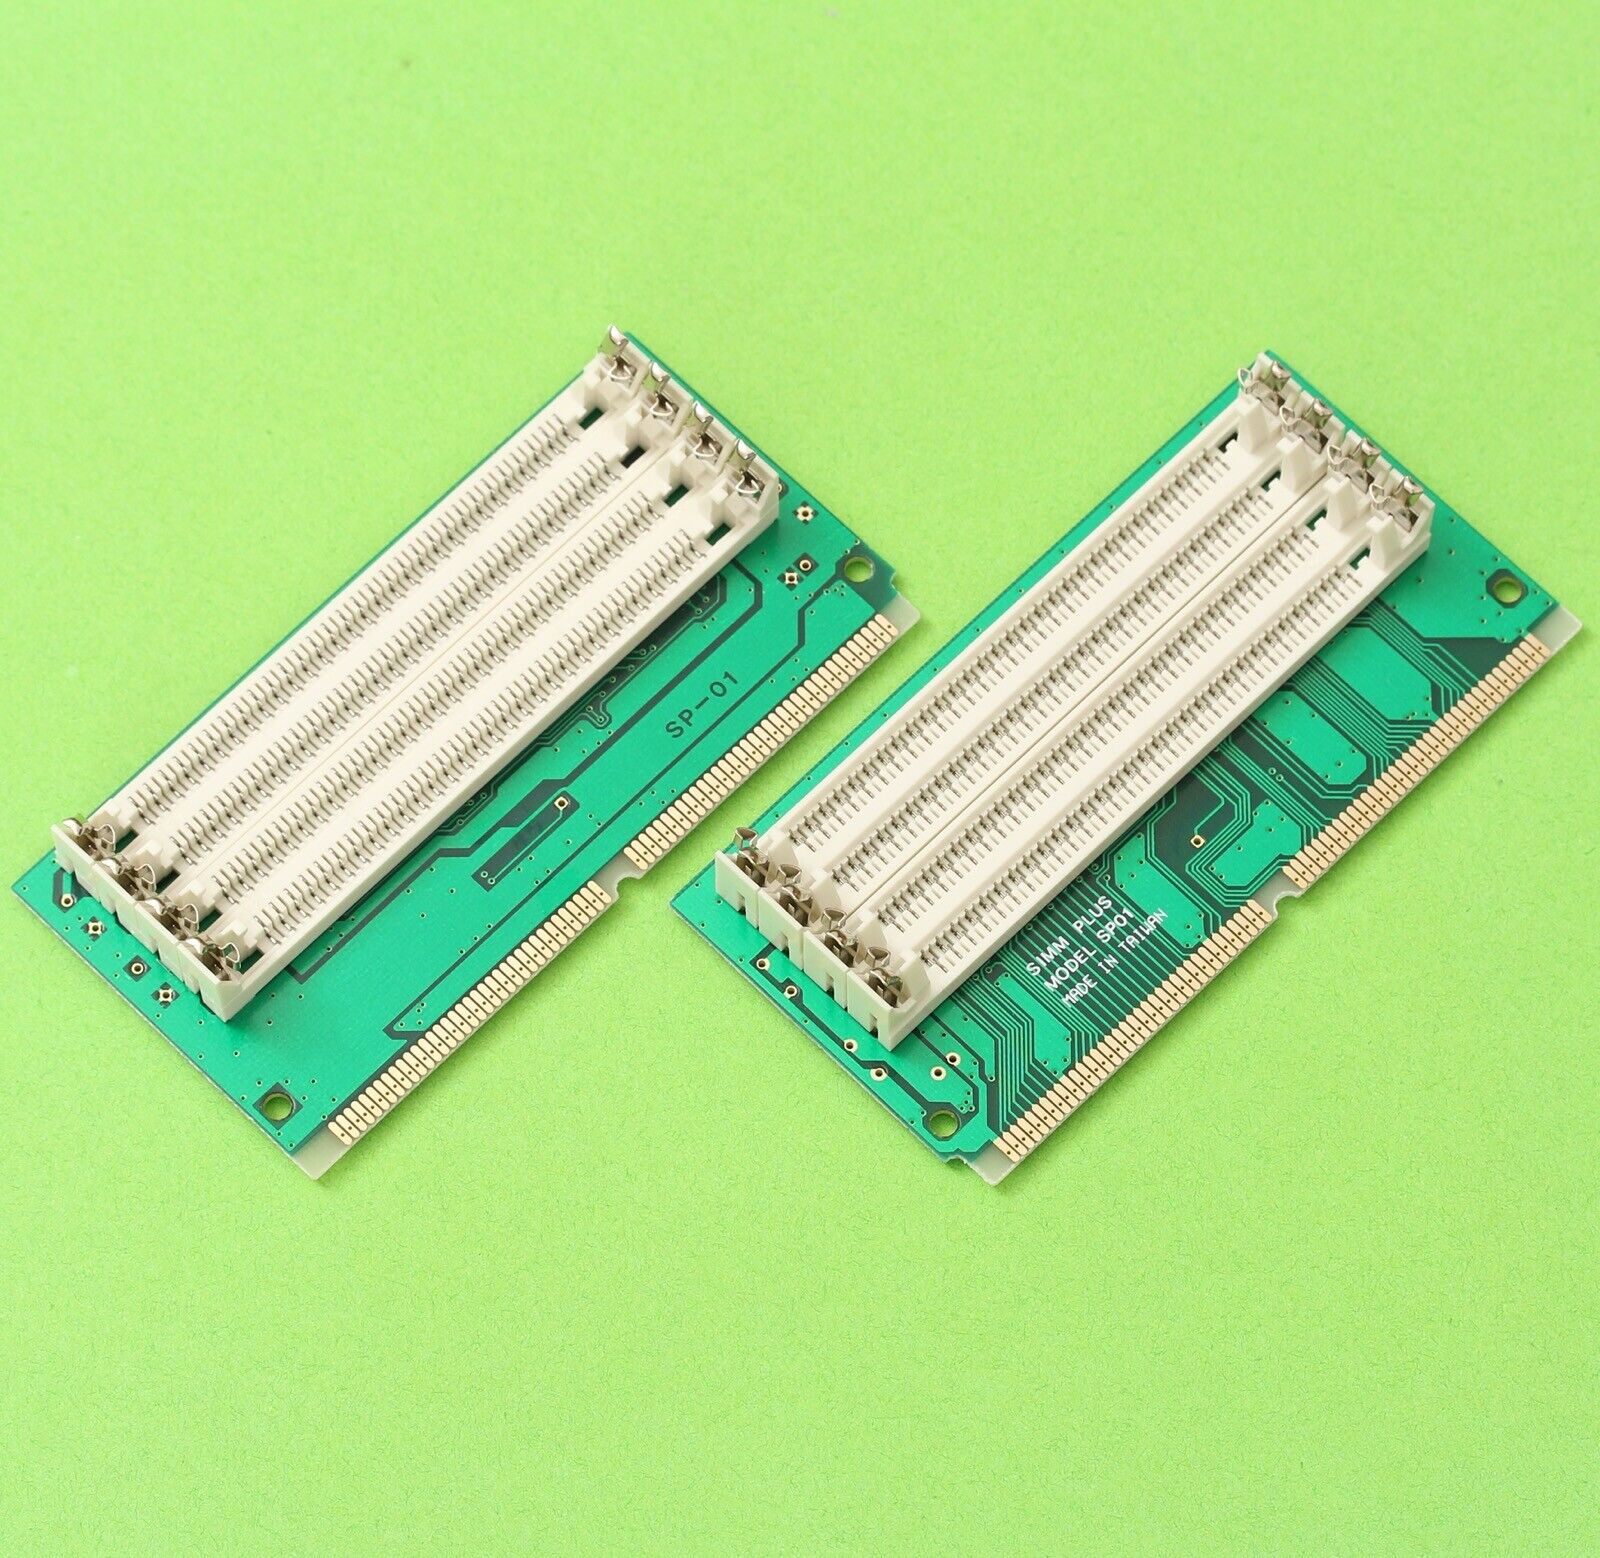 4x 30 Pin to 72 Pin RAM Convertor Adapter ‘SimmVerter’ SIMM Plus SP01 